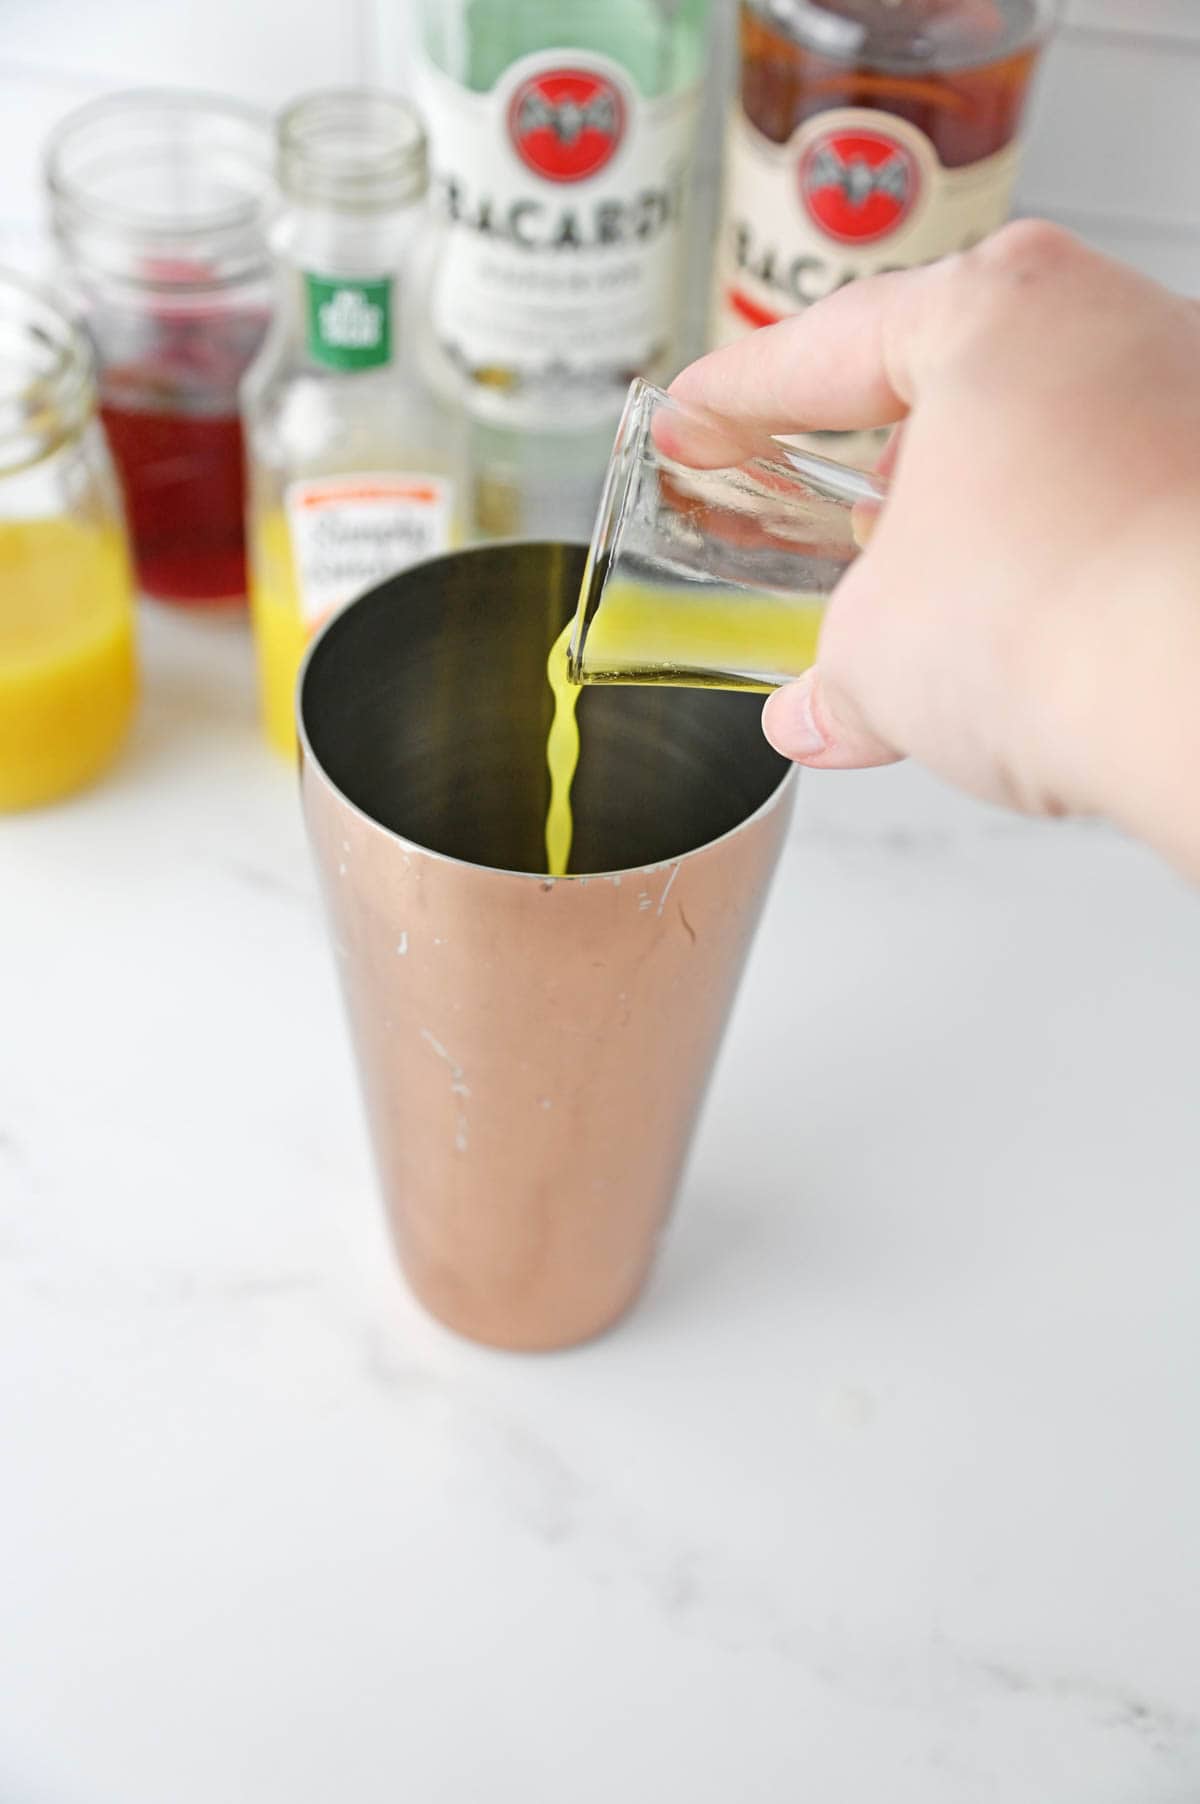 Adding orange juice to cocktail shaker